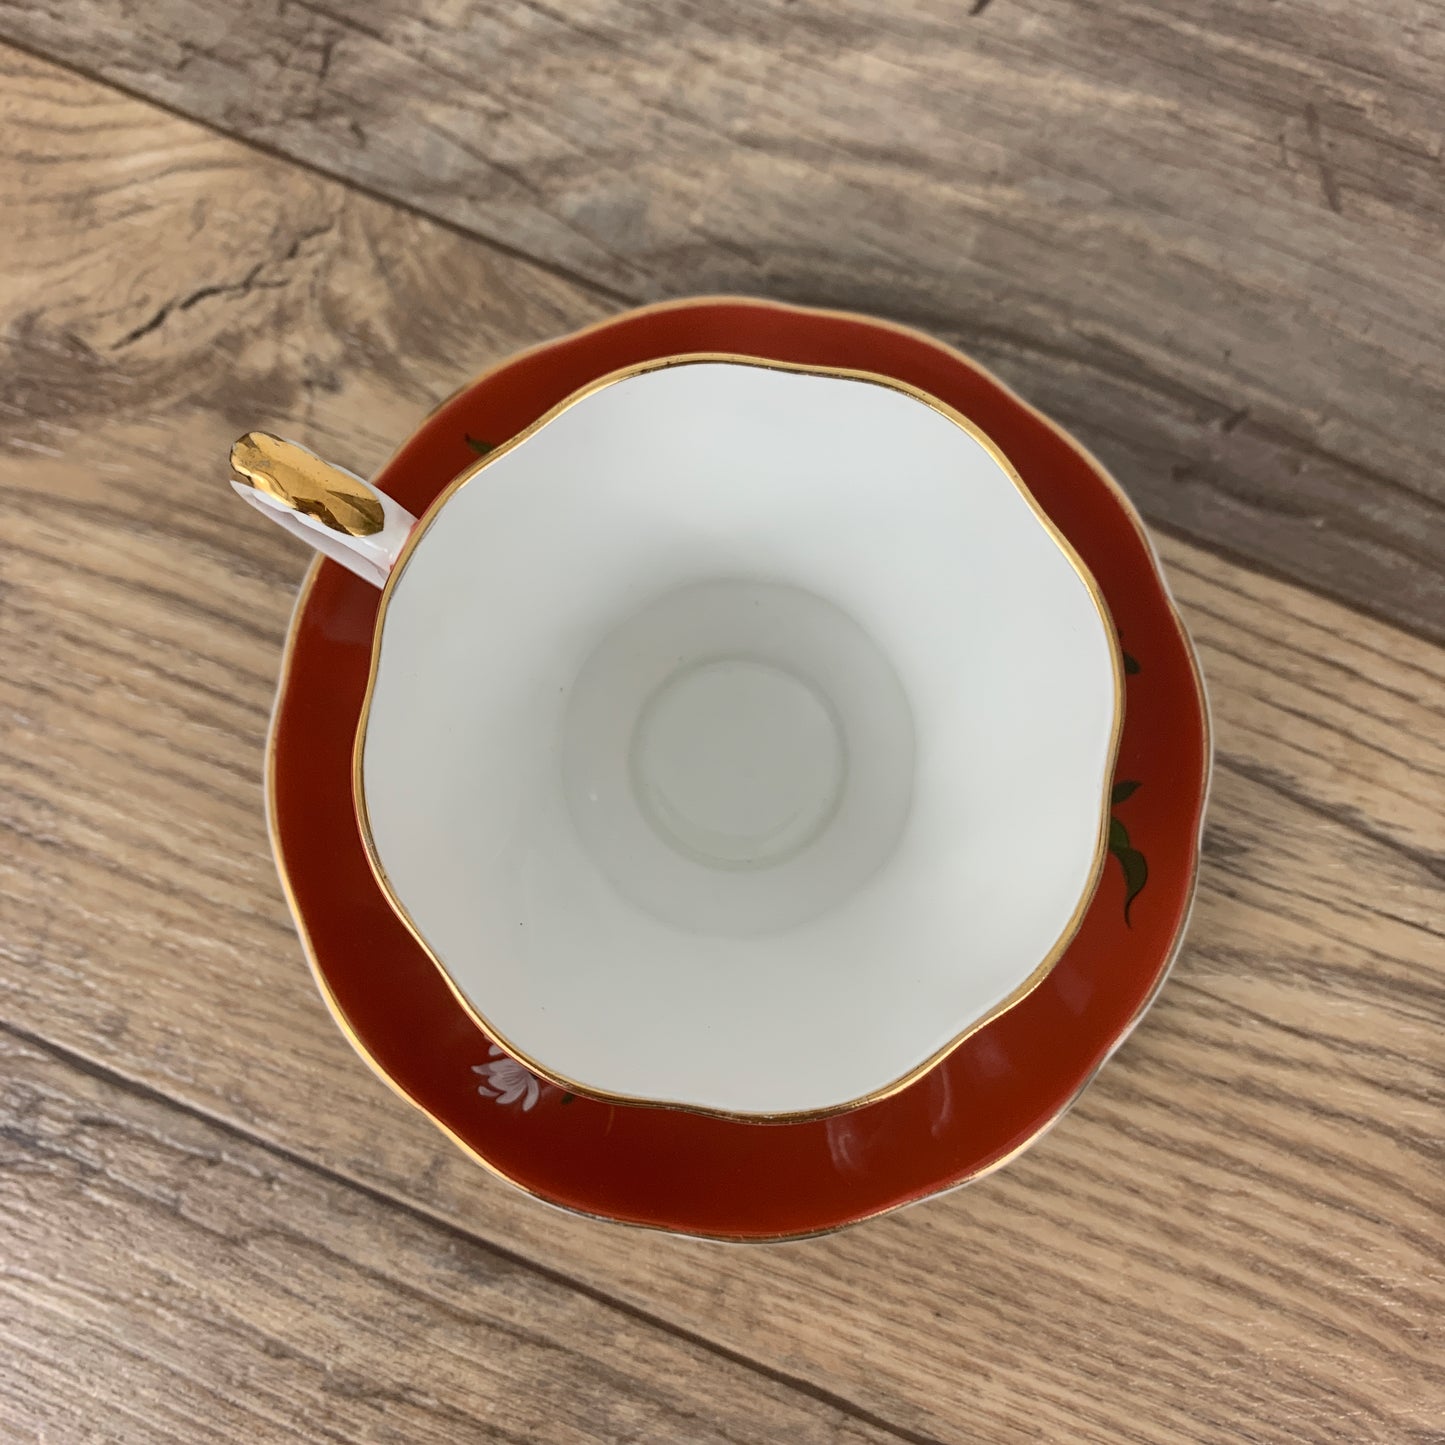 Royal Grafton Hand Painted Teacup and Saucer Set